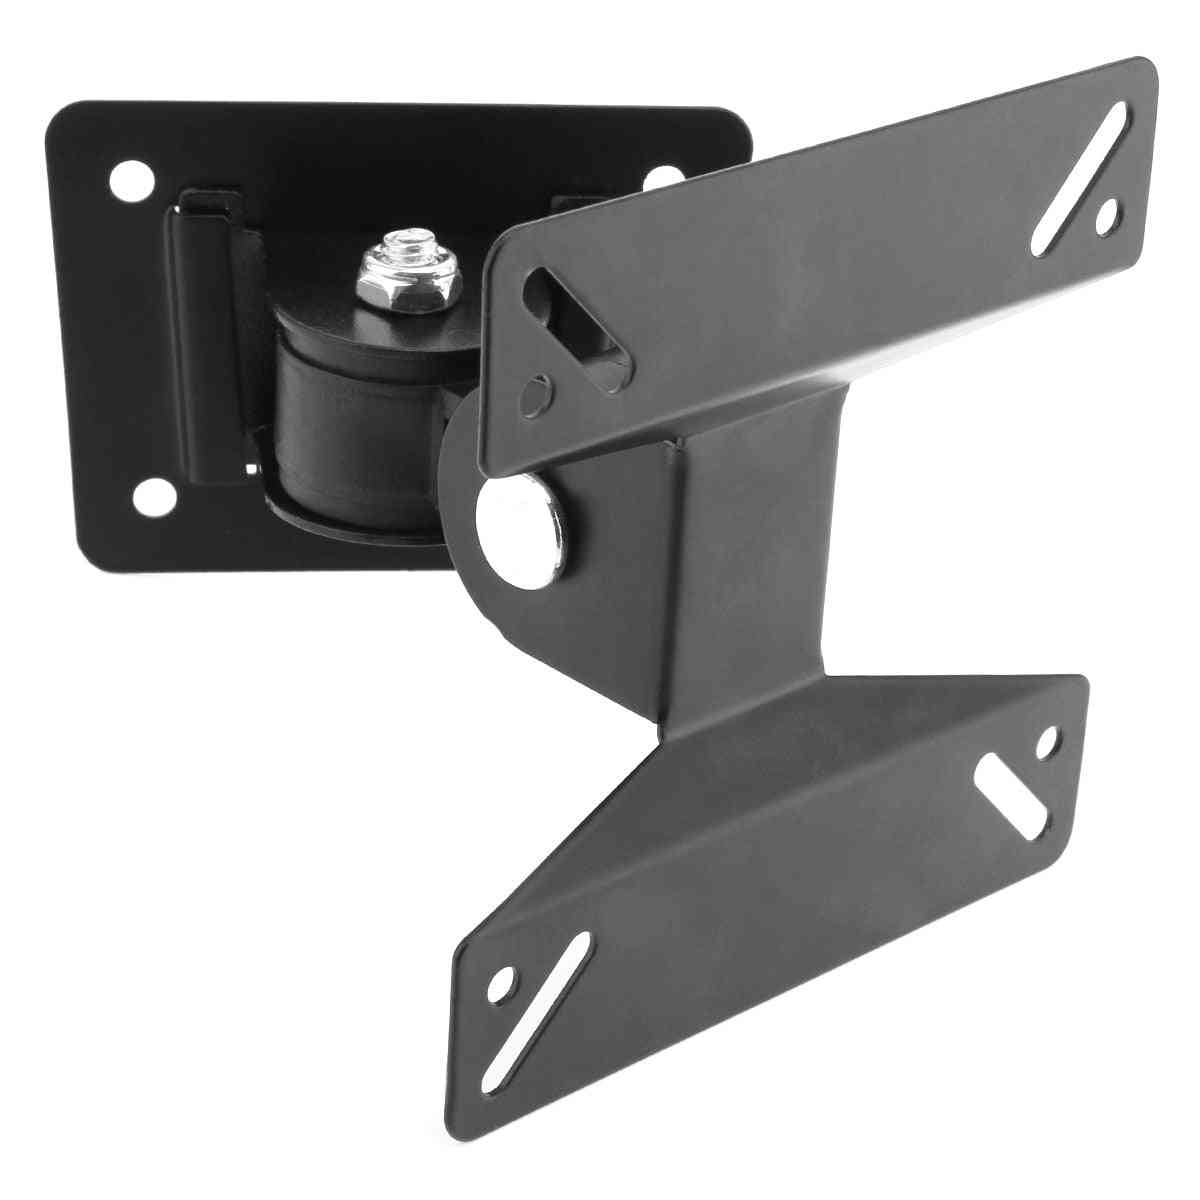 Adjustable And Rotatable-wall Mount Tv Holder Bracket